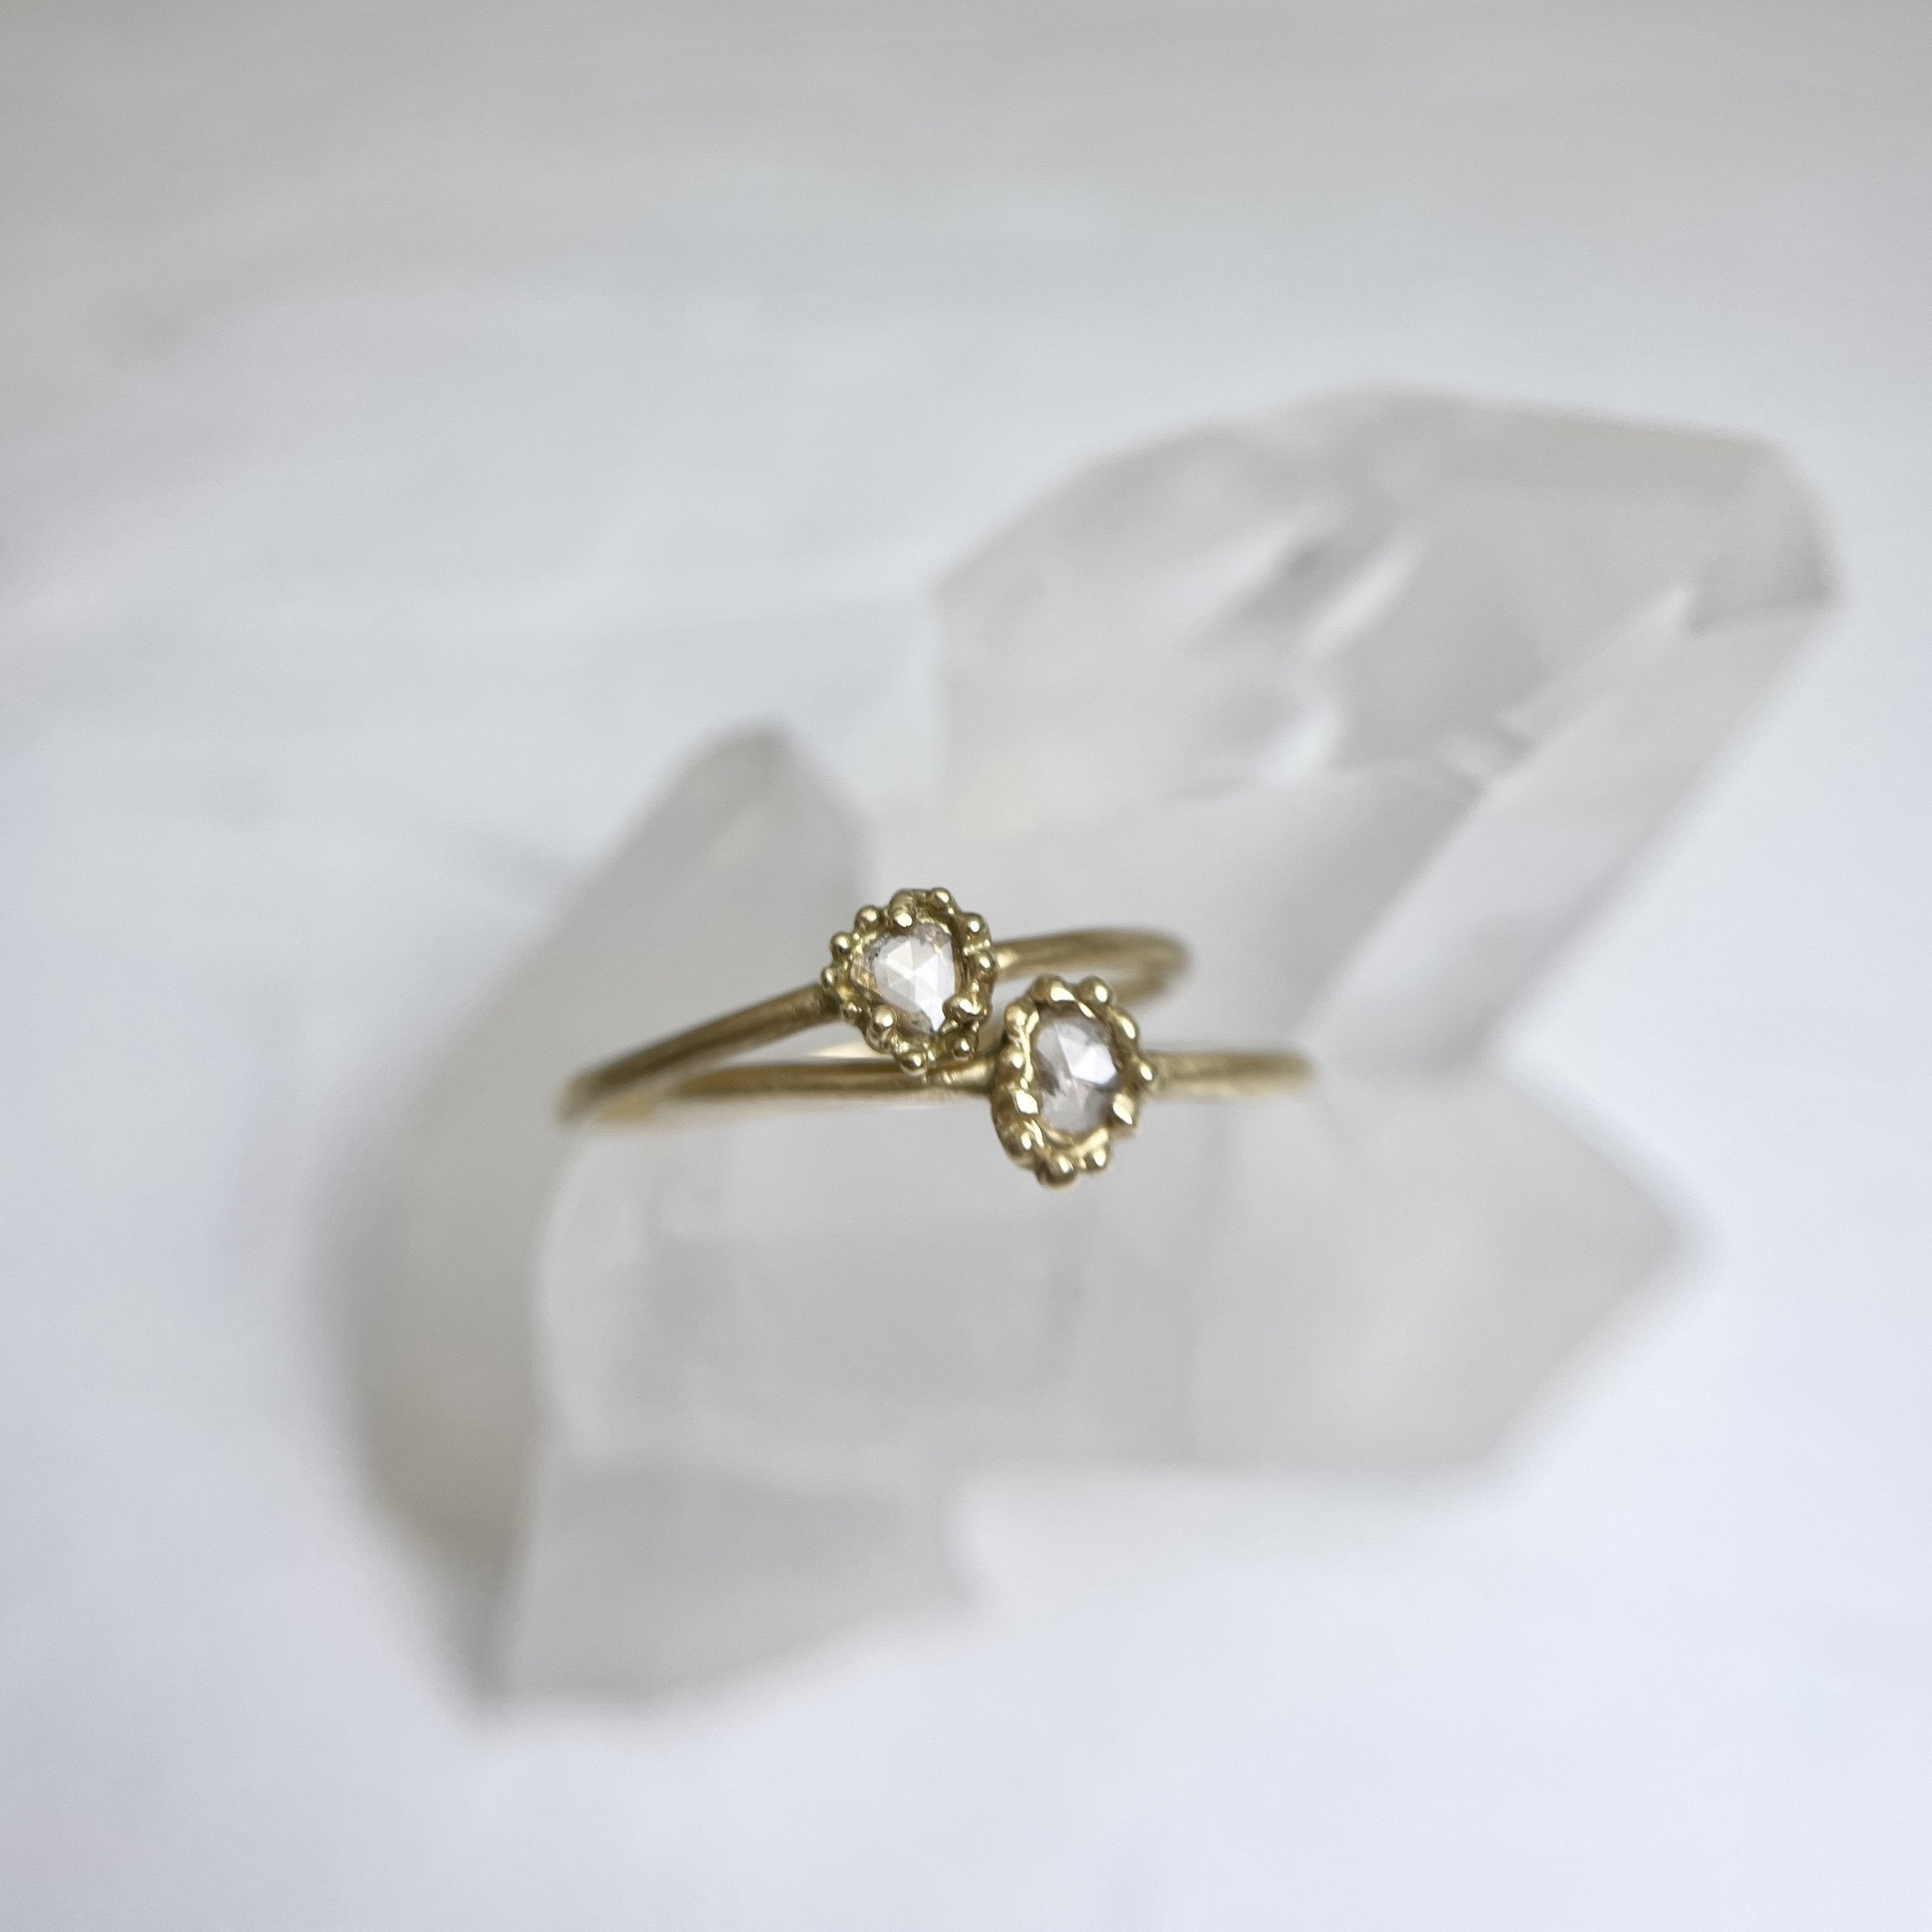 Small Light Brown Rose Cut Diamond Ring (18k)